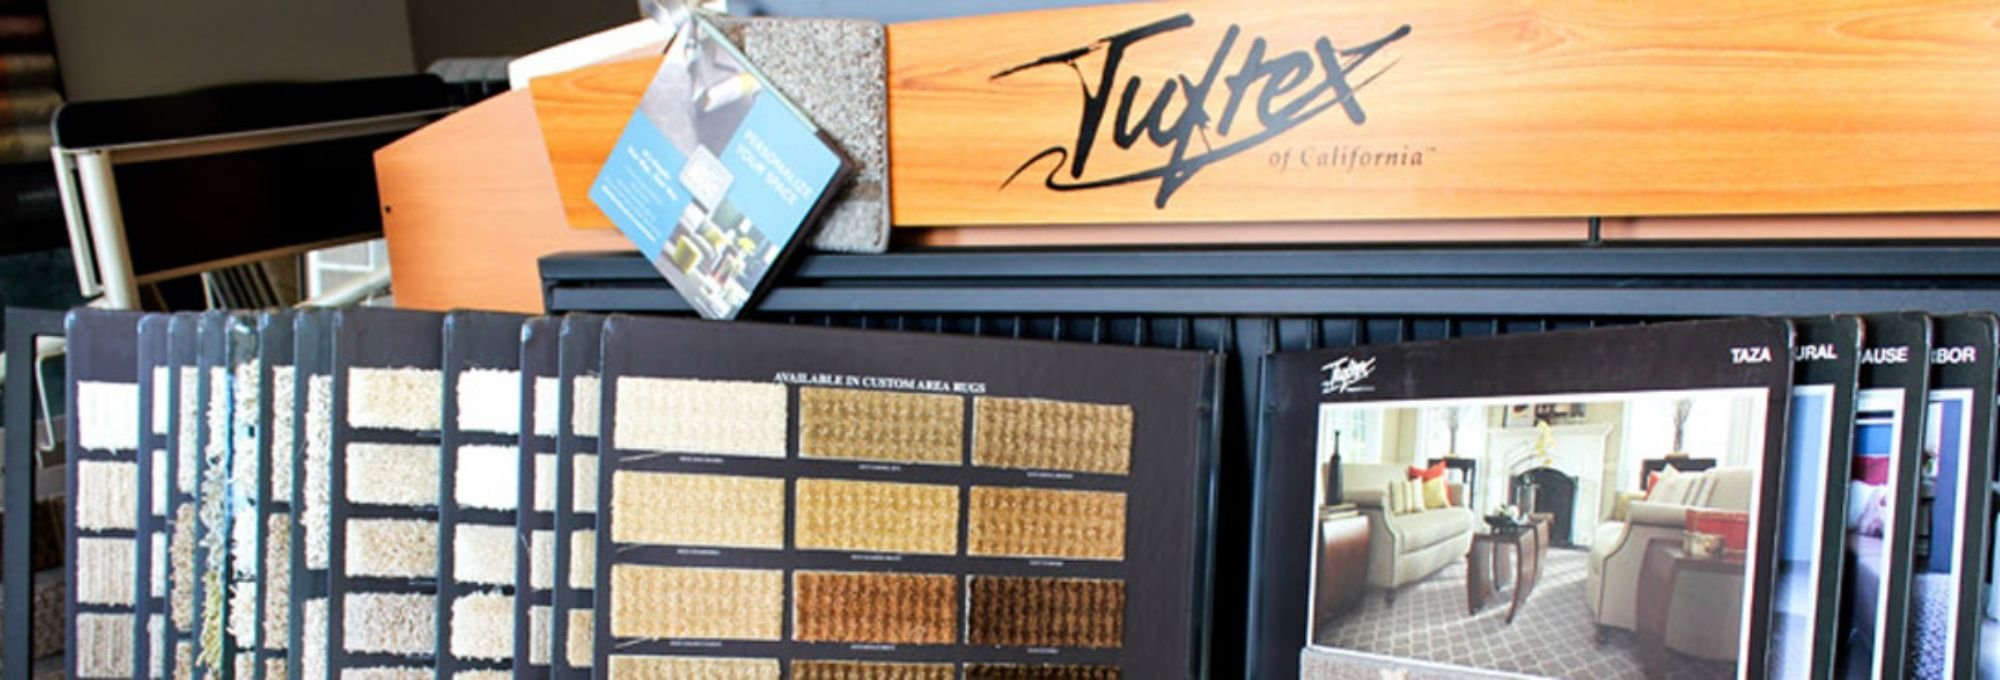 Tuftex samples from Choo Choo Carpets & Floor Coverings, Inc in Lane Chattanooga, TN